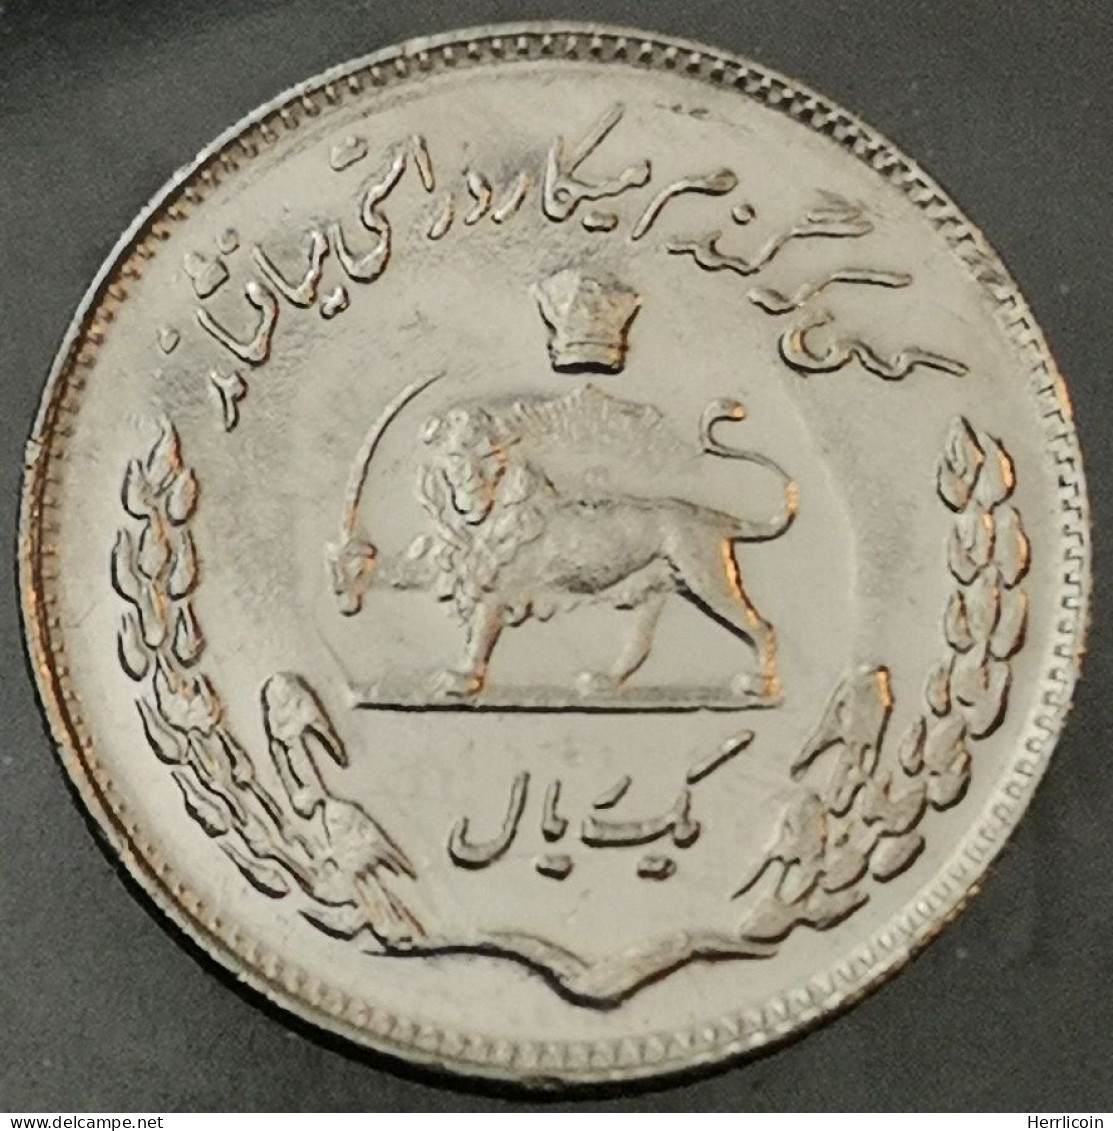 Monnaie Iran - 1971 - 1 Rial - Muhammad Reza Pahlavi - Irán